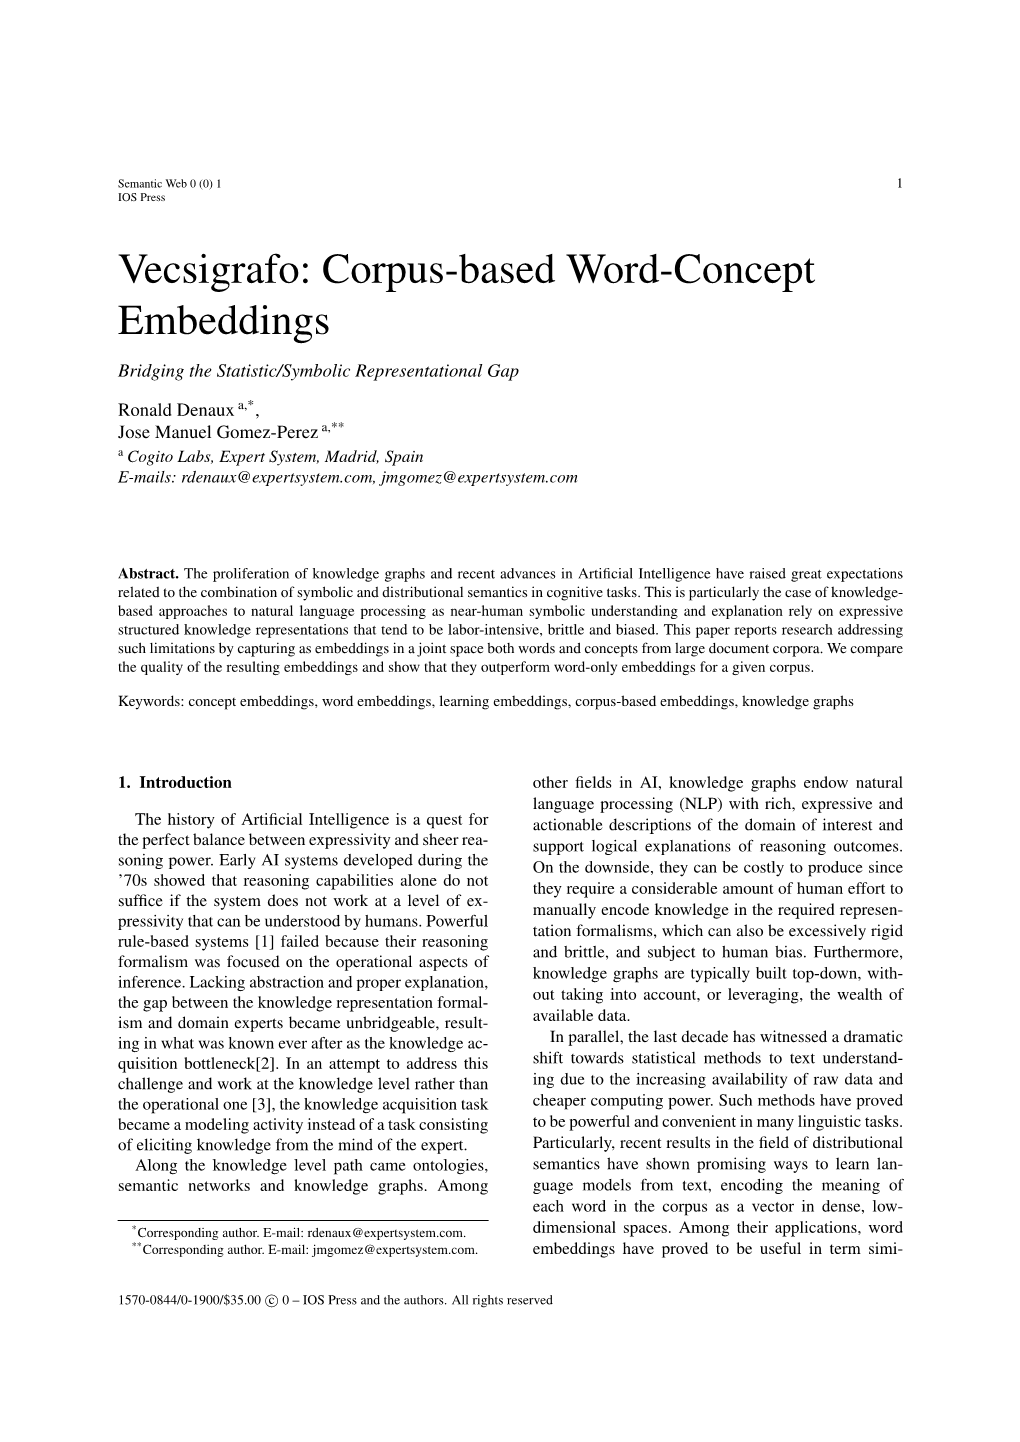 Corpus-Based Word-Concept Embeddings Bridging the Statistic/Symbolic Representational Gap